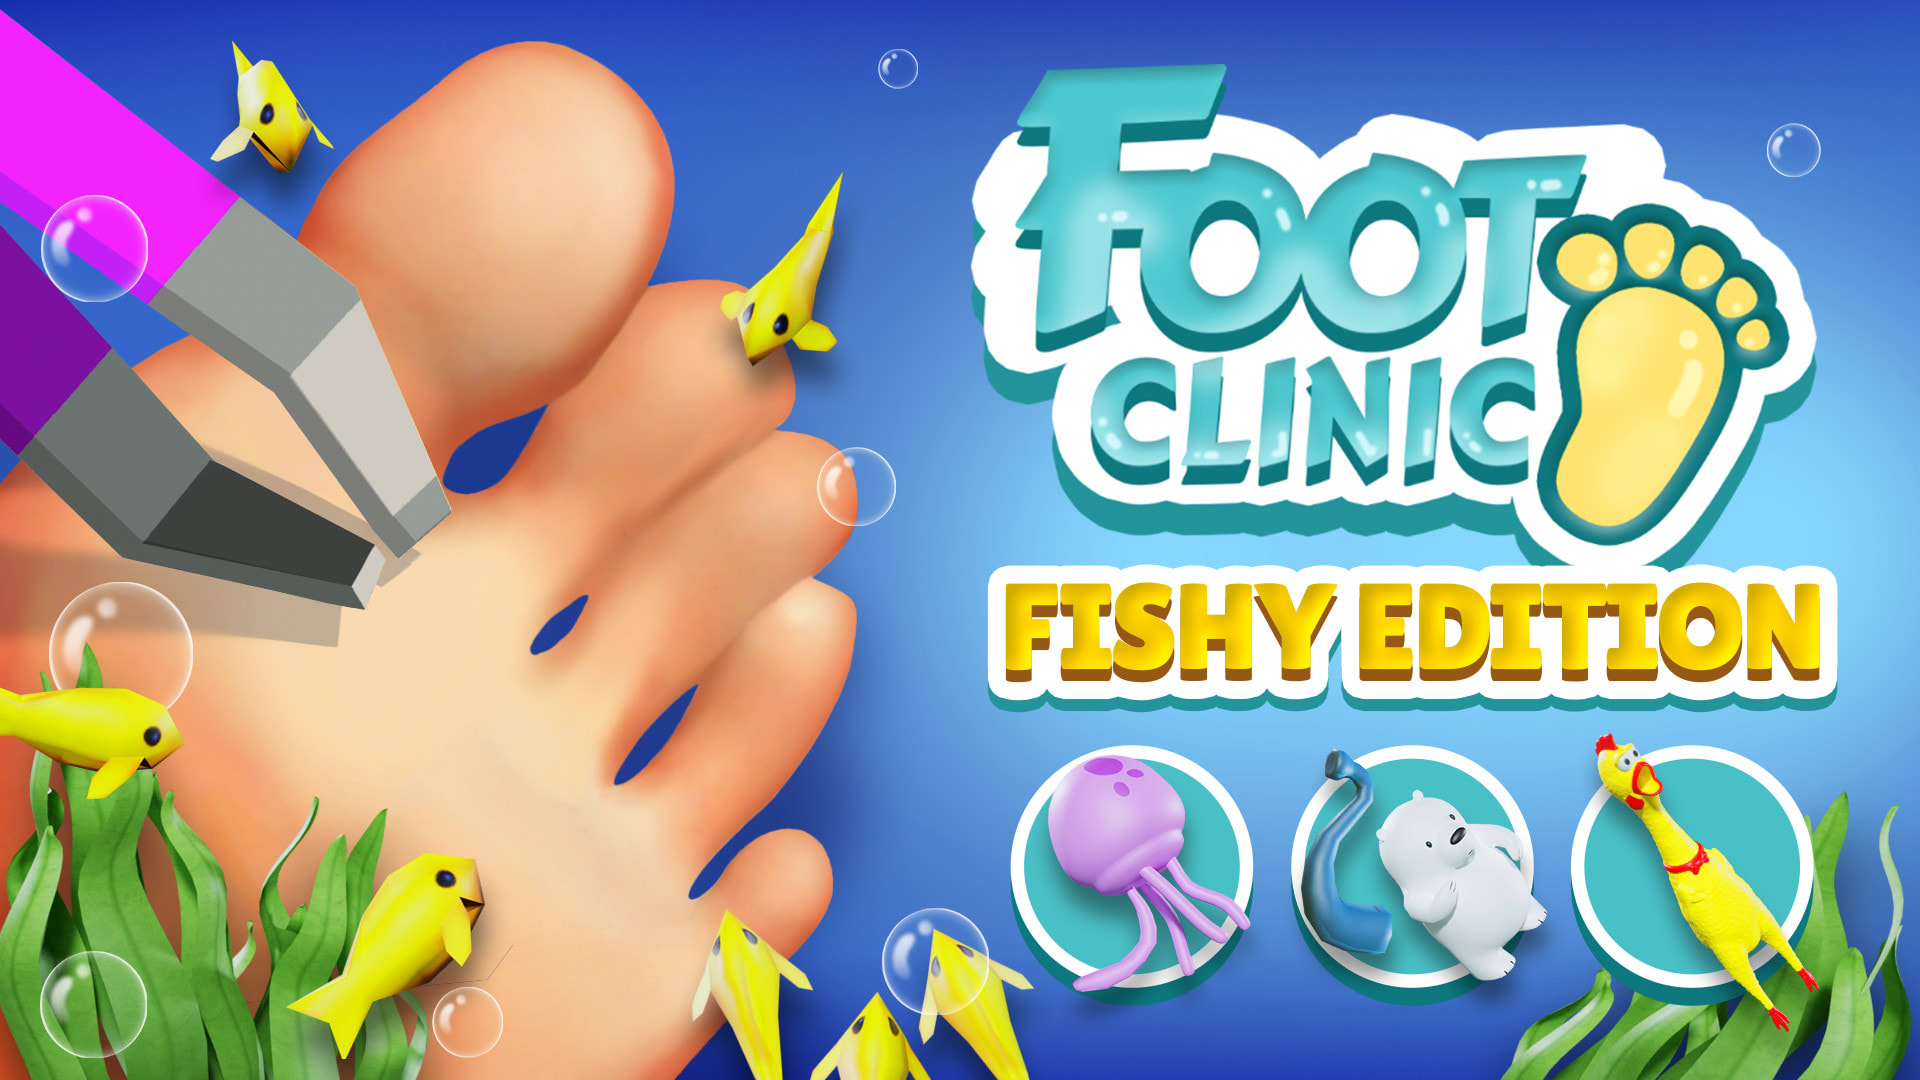 Foot Clinic: Fishy Edition